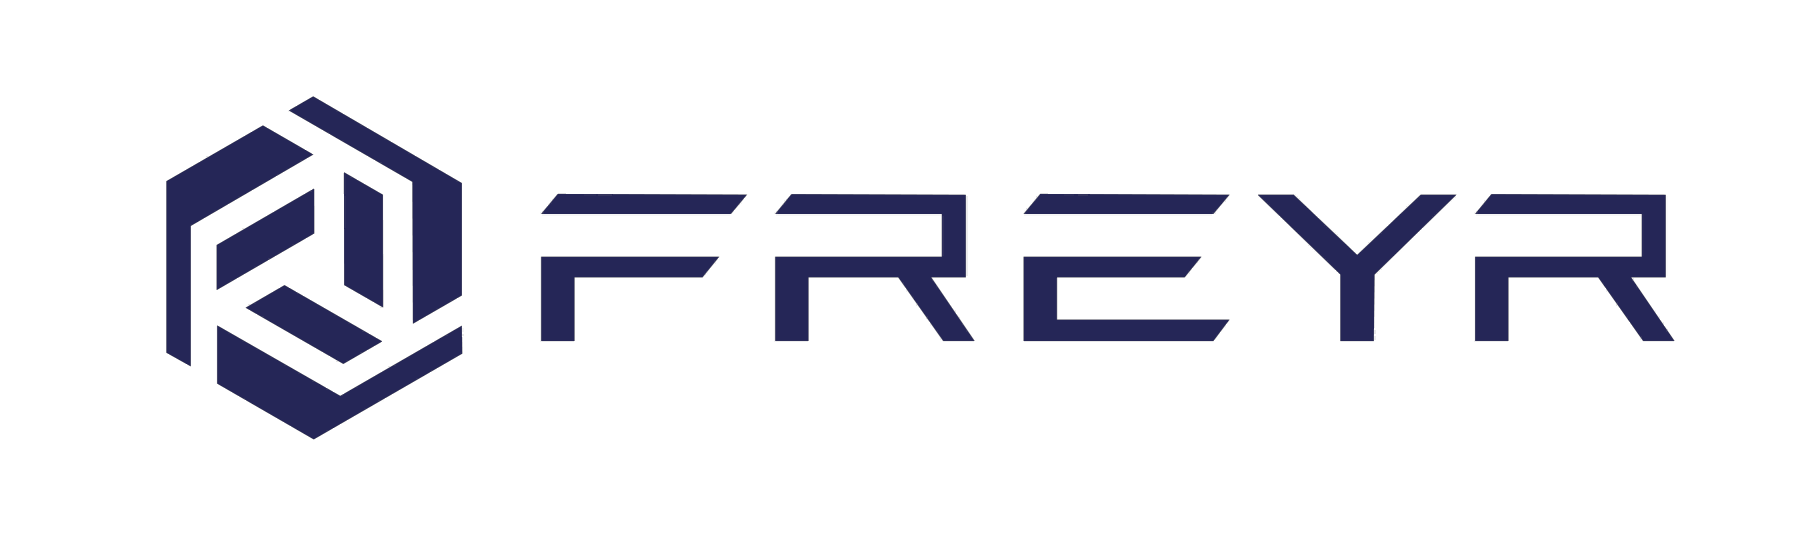 Freyr Technology 